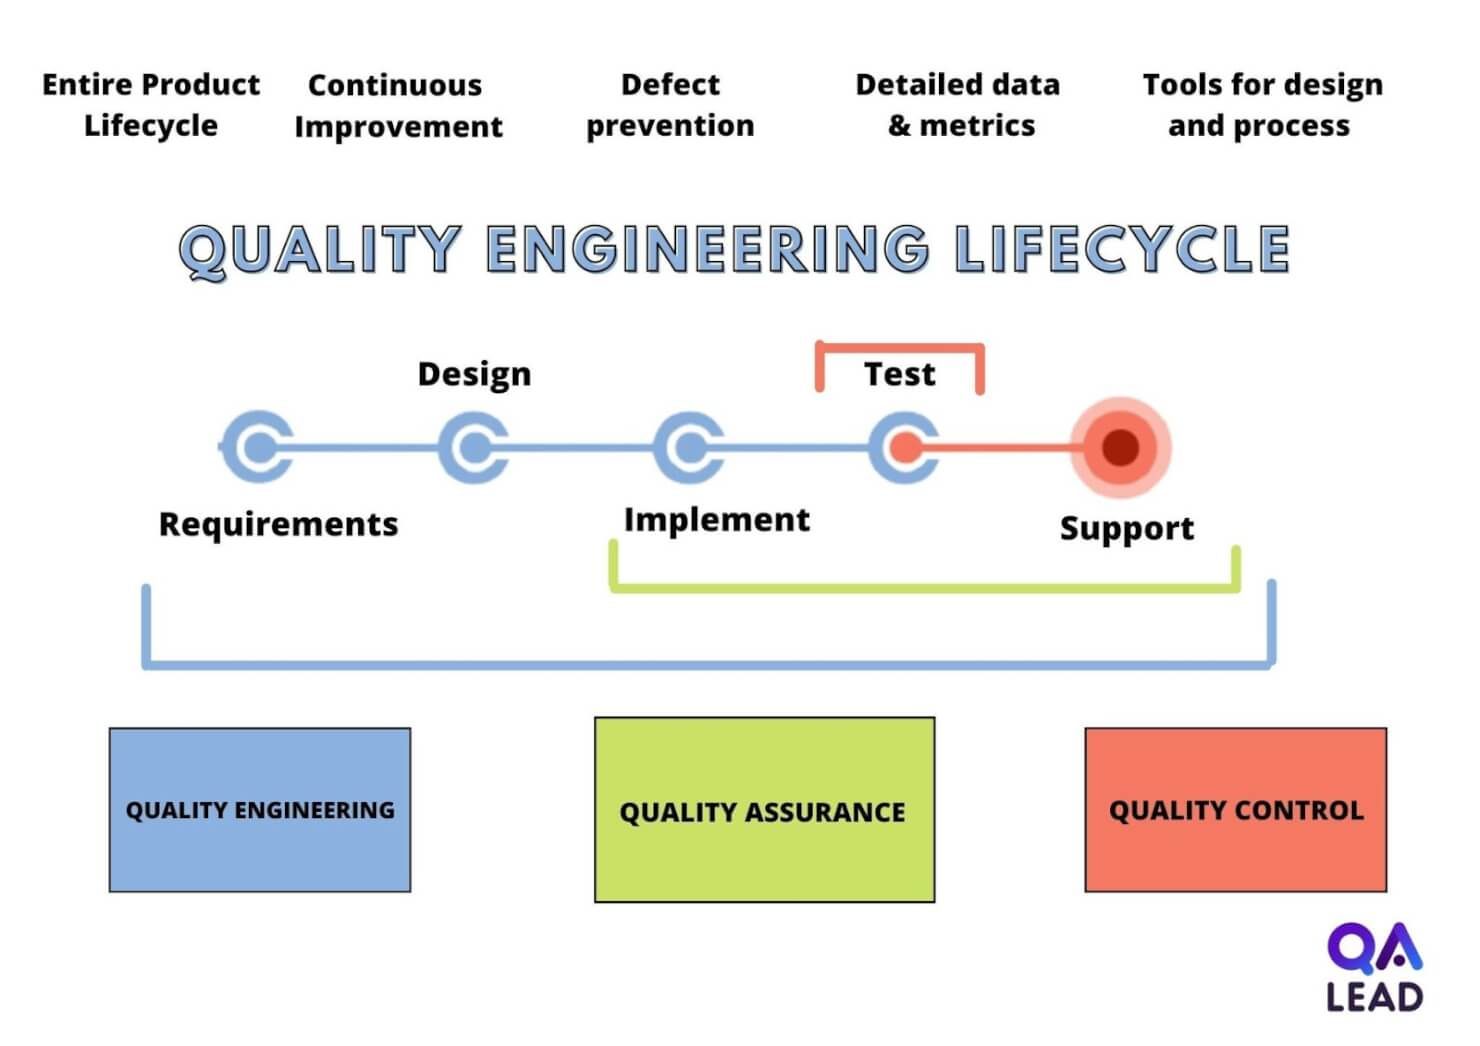 Lead engineering. Lead QA обязанности. Lead quality Engineer. Quality Assurance. Evolution Life Cycle.